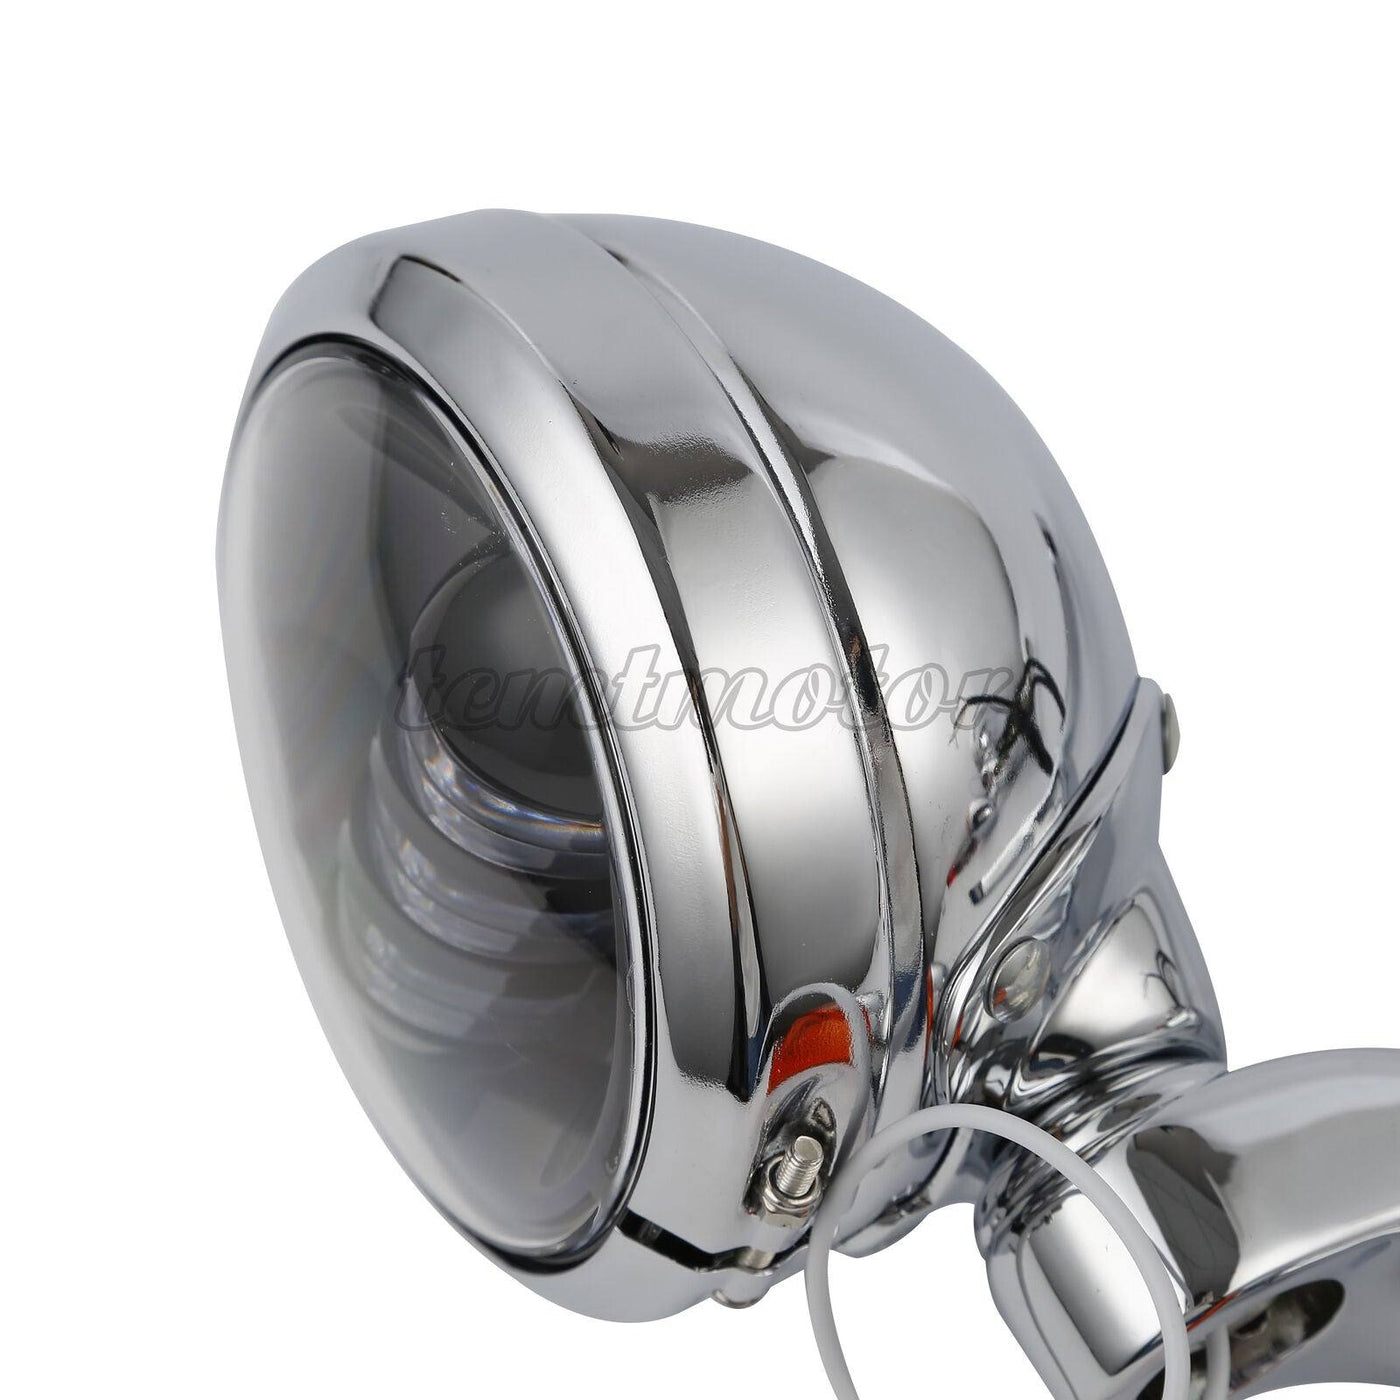 Turn Signal LED Spot Fog Light Bracket For Harley Touring Street Road Glide94-13 - Moto Life Products